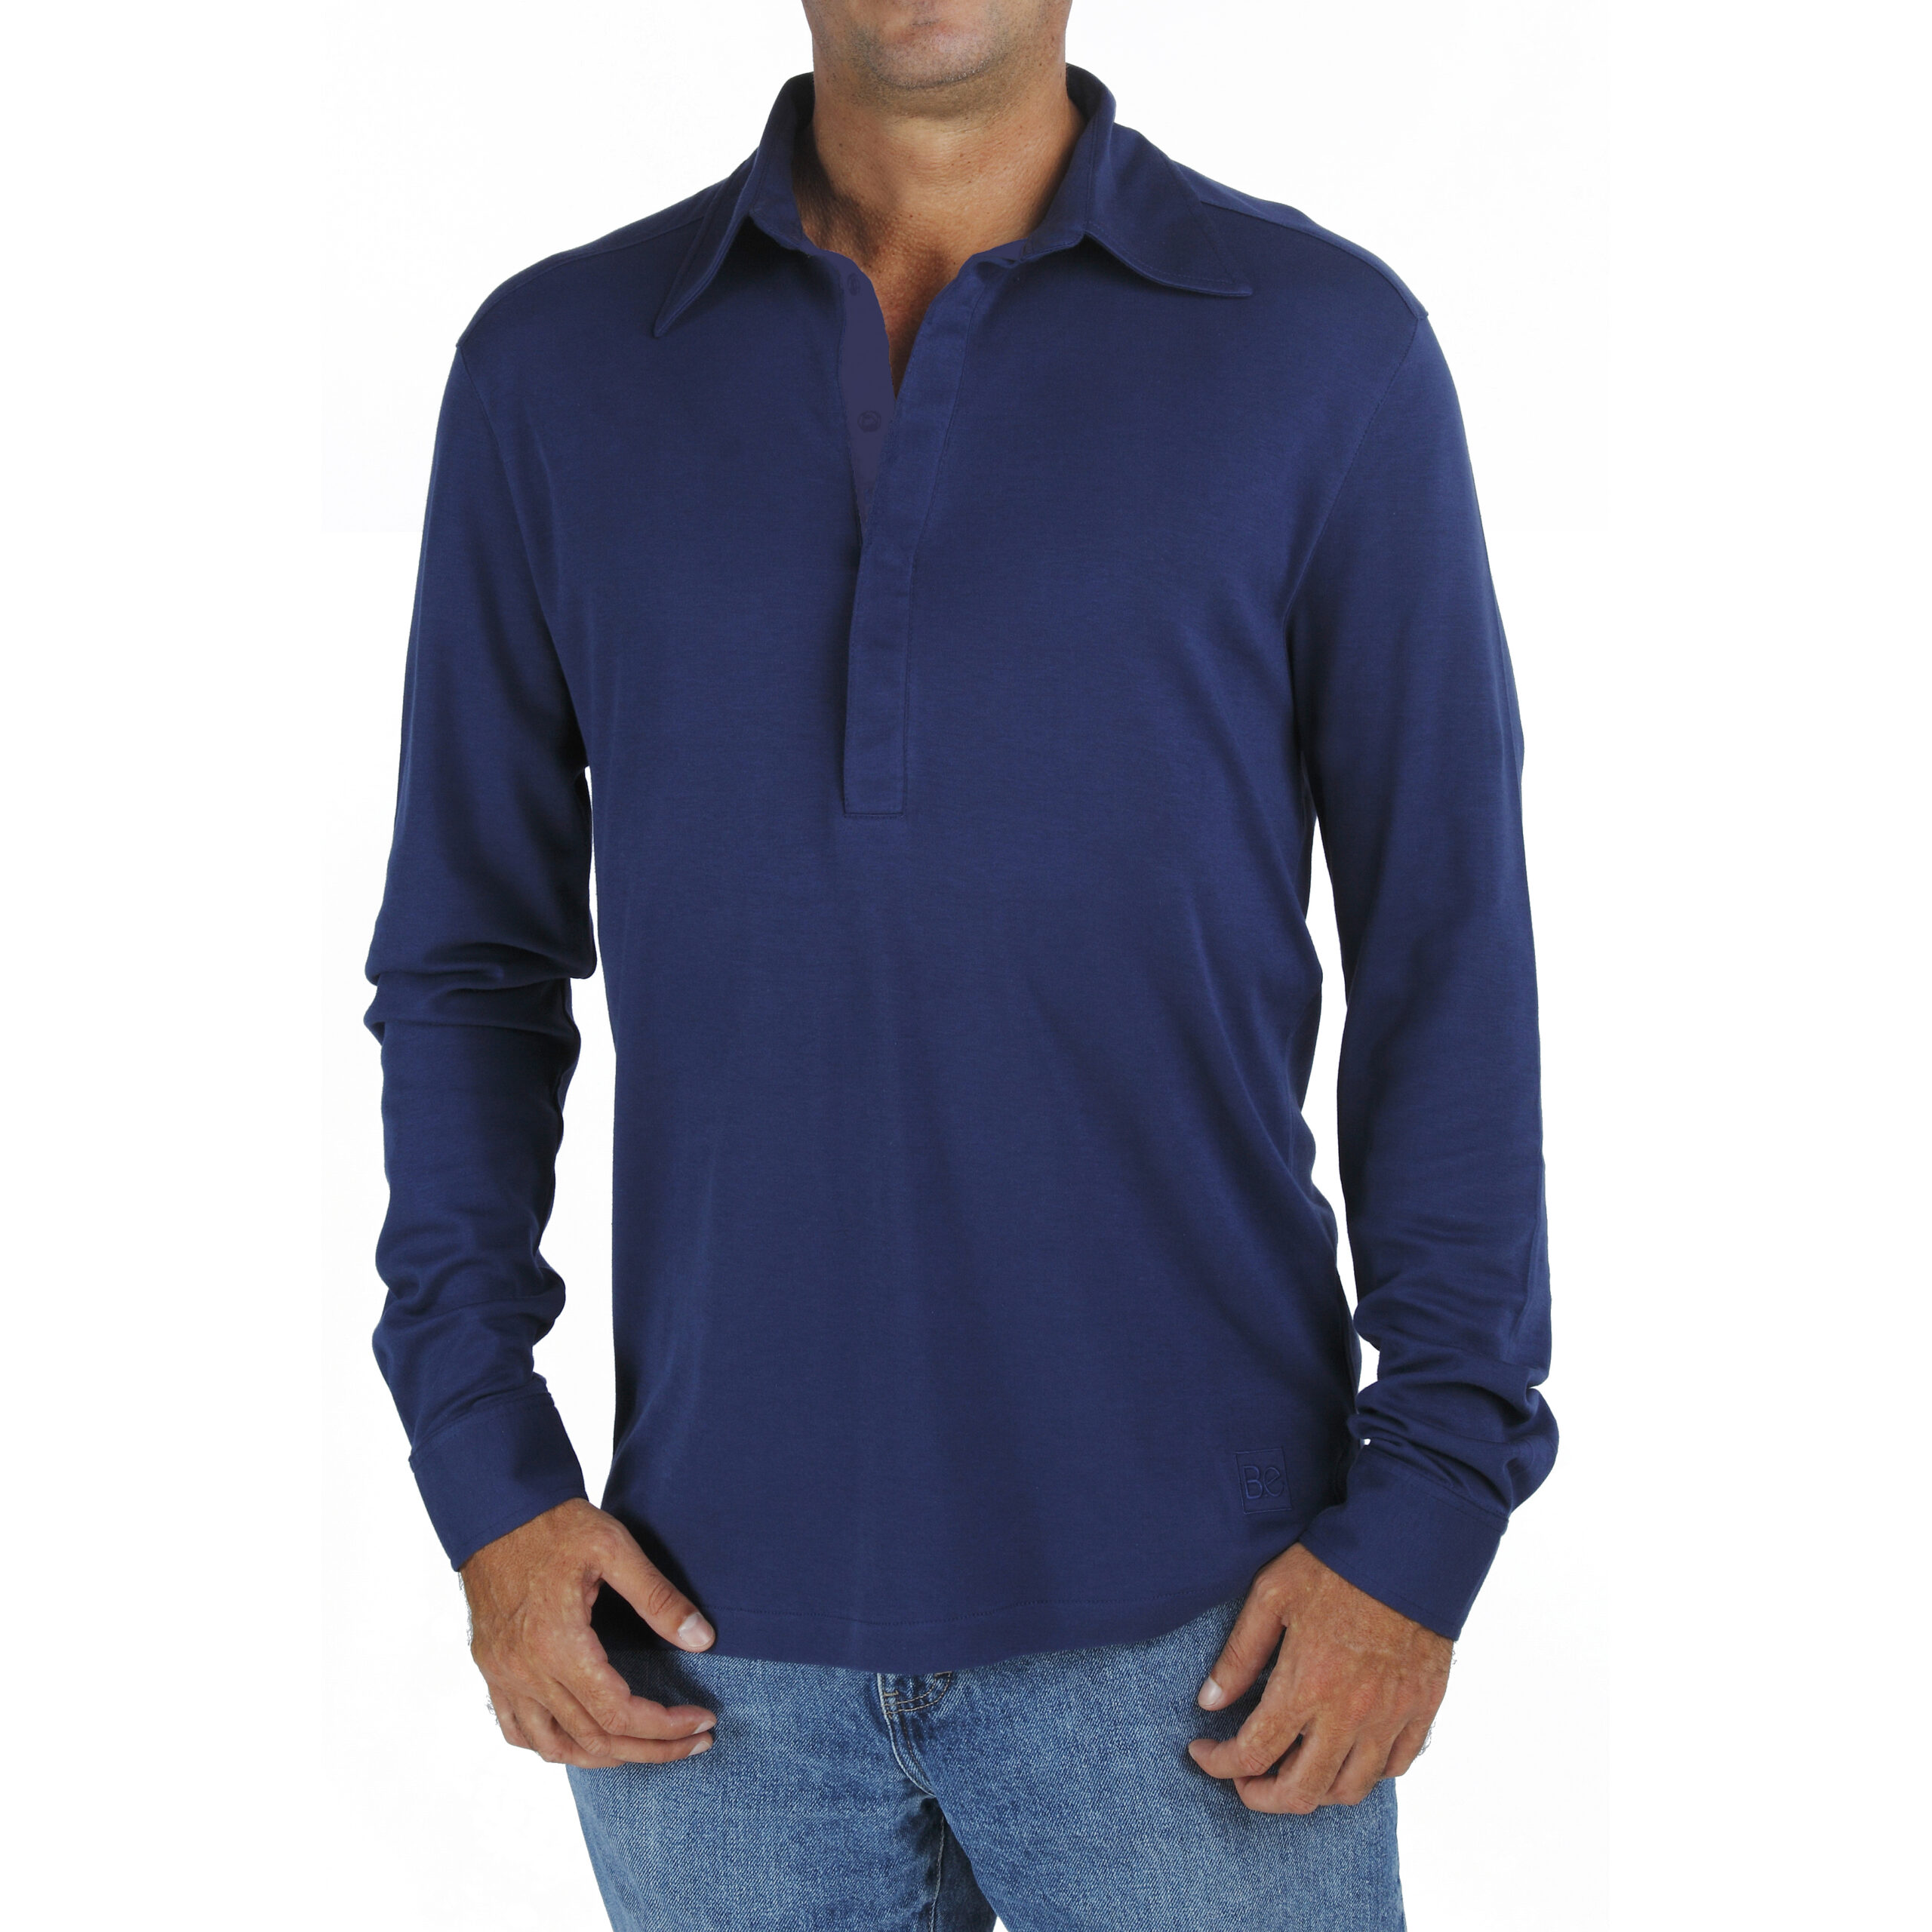 Mens Full Sleeve Polo Shirt T-shirt Fashion Top Work Wear 100% Cotton S M L XL 